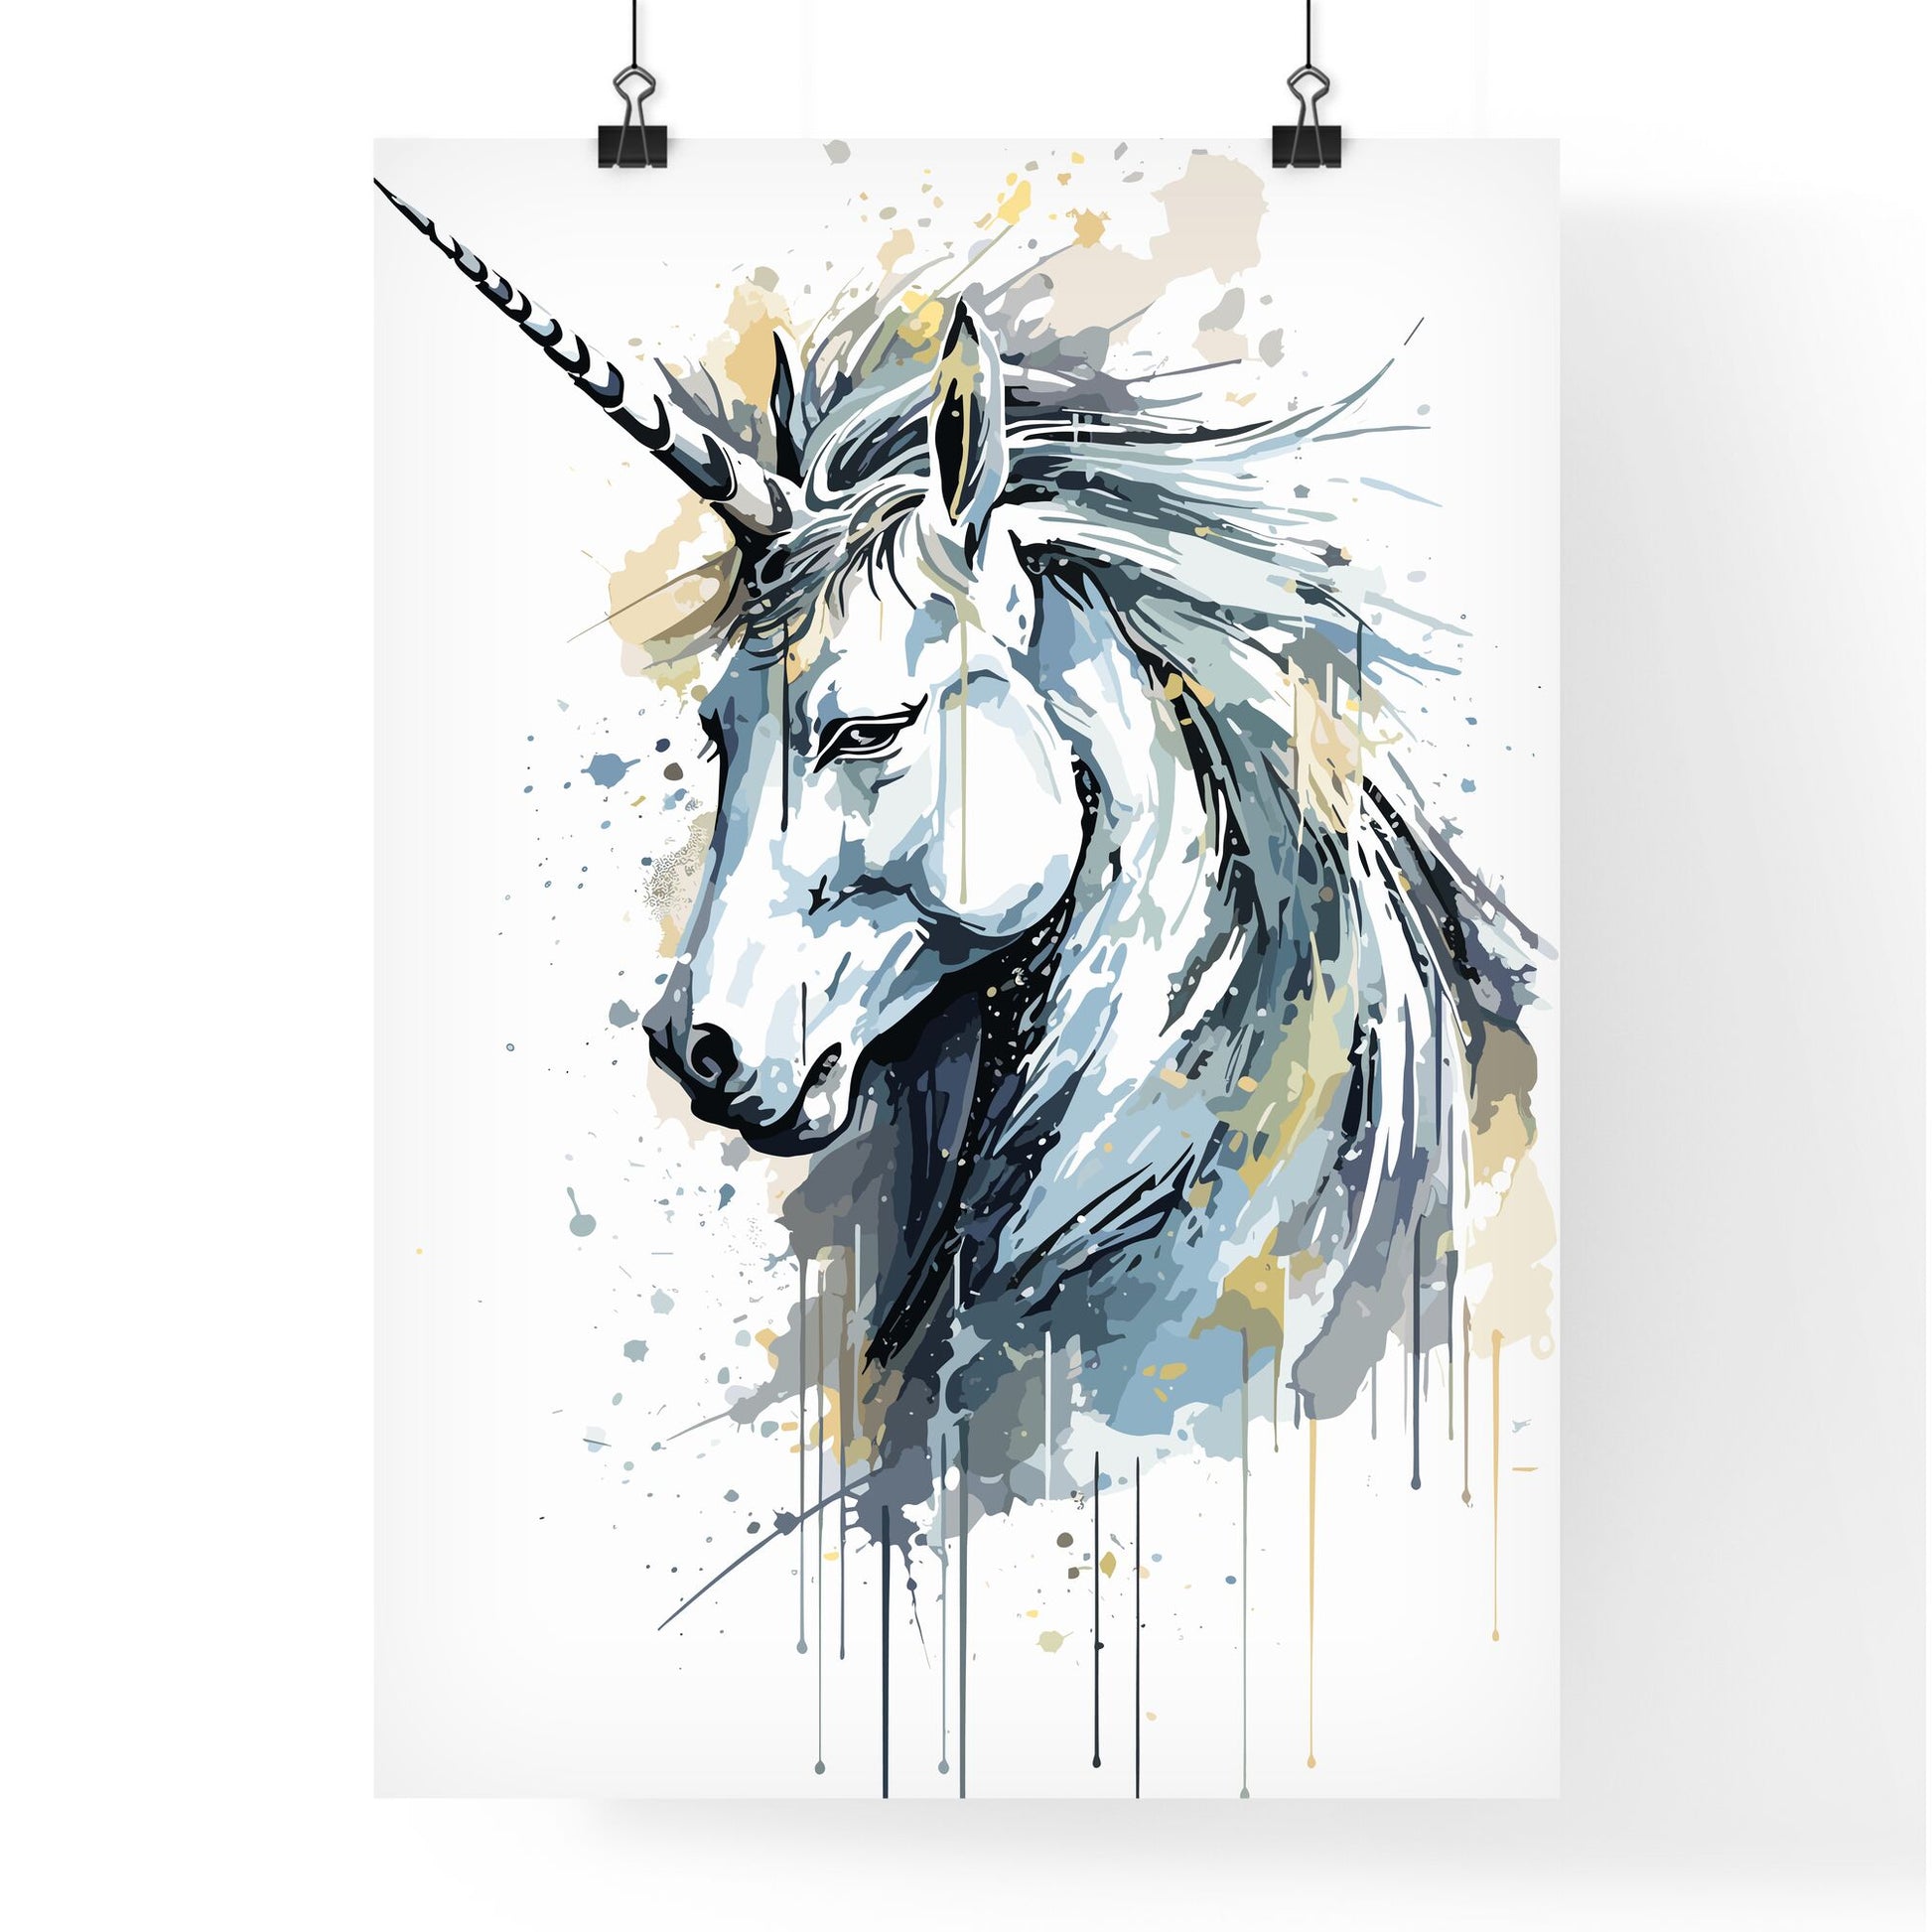 Beatiful Unicorn - A Painting Of A Unicorn Default Title